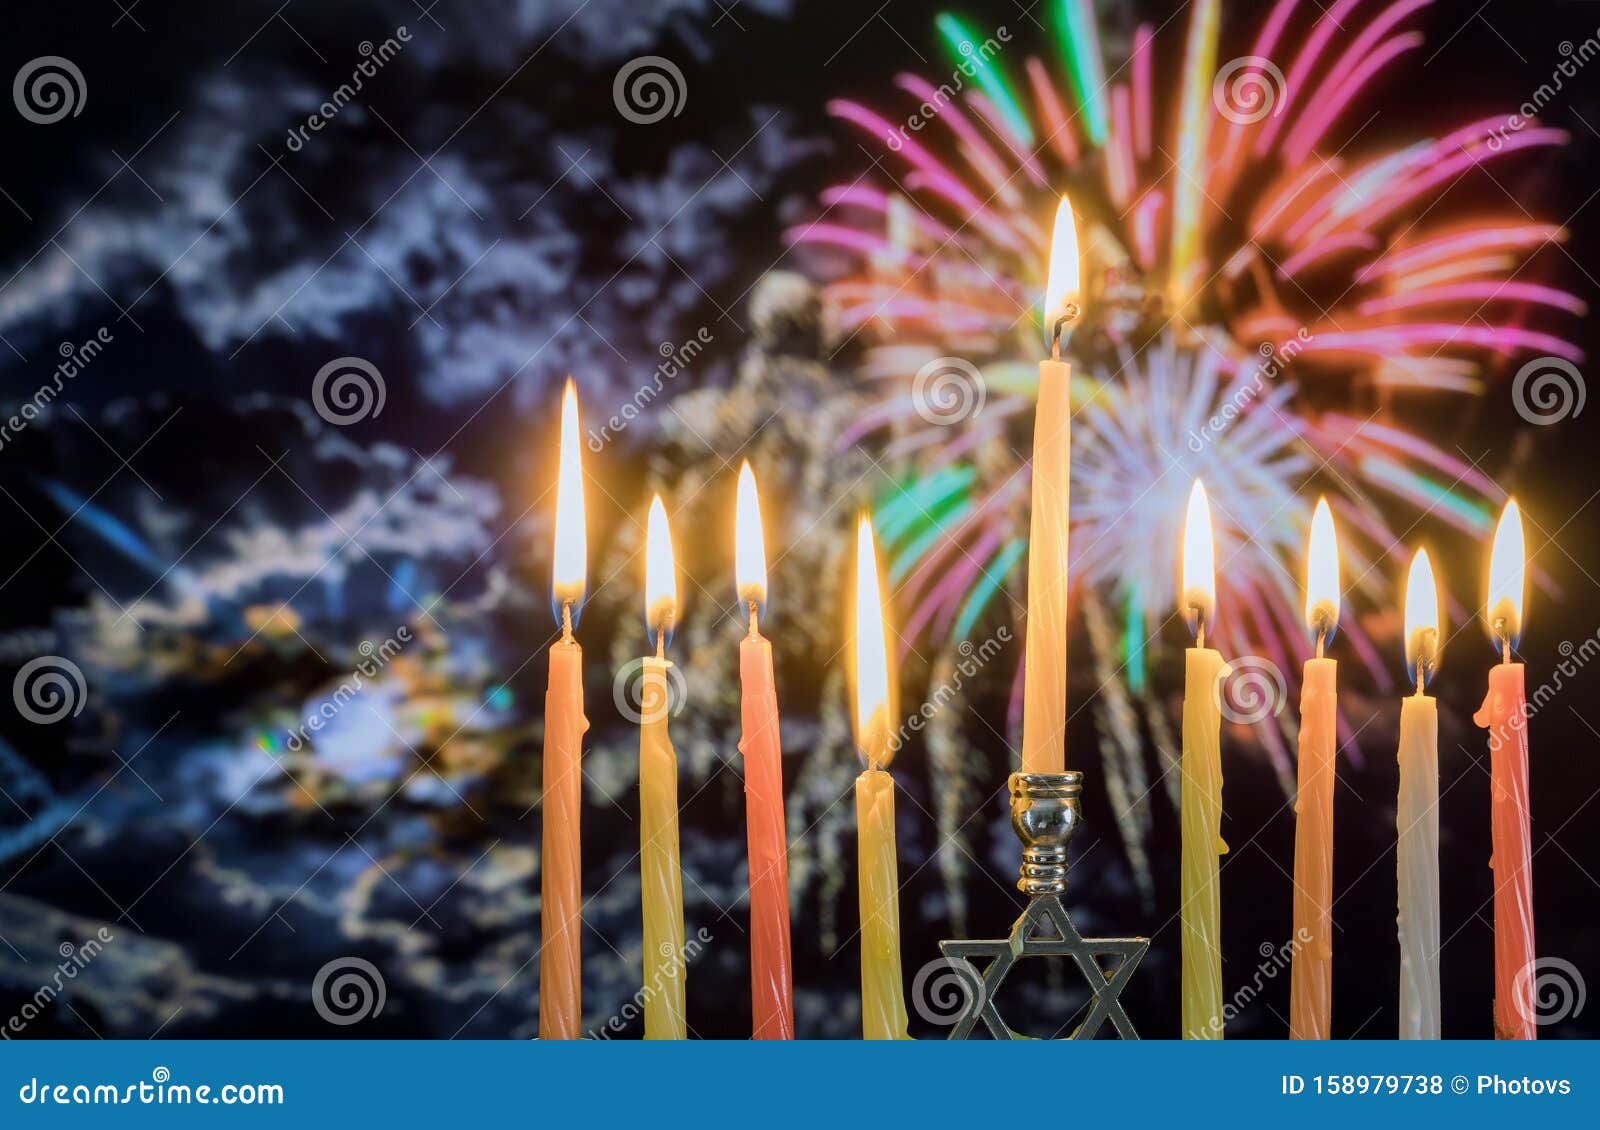 hanukkah menorah with candles, colorful firework sky background